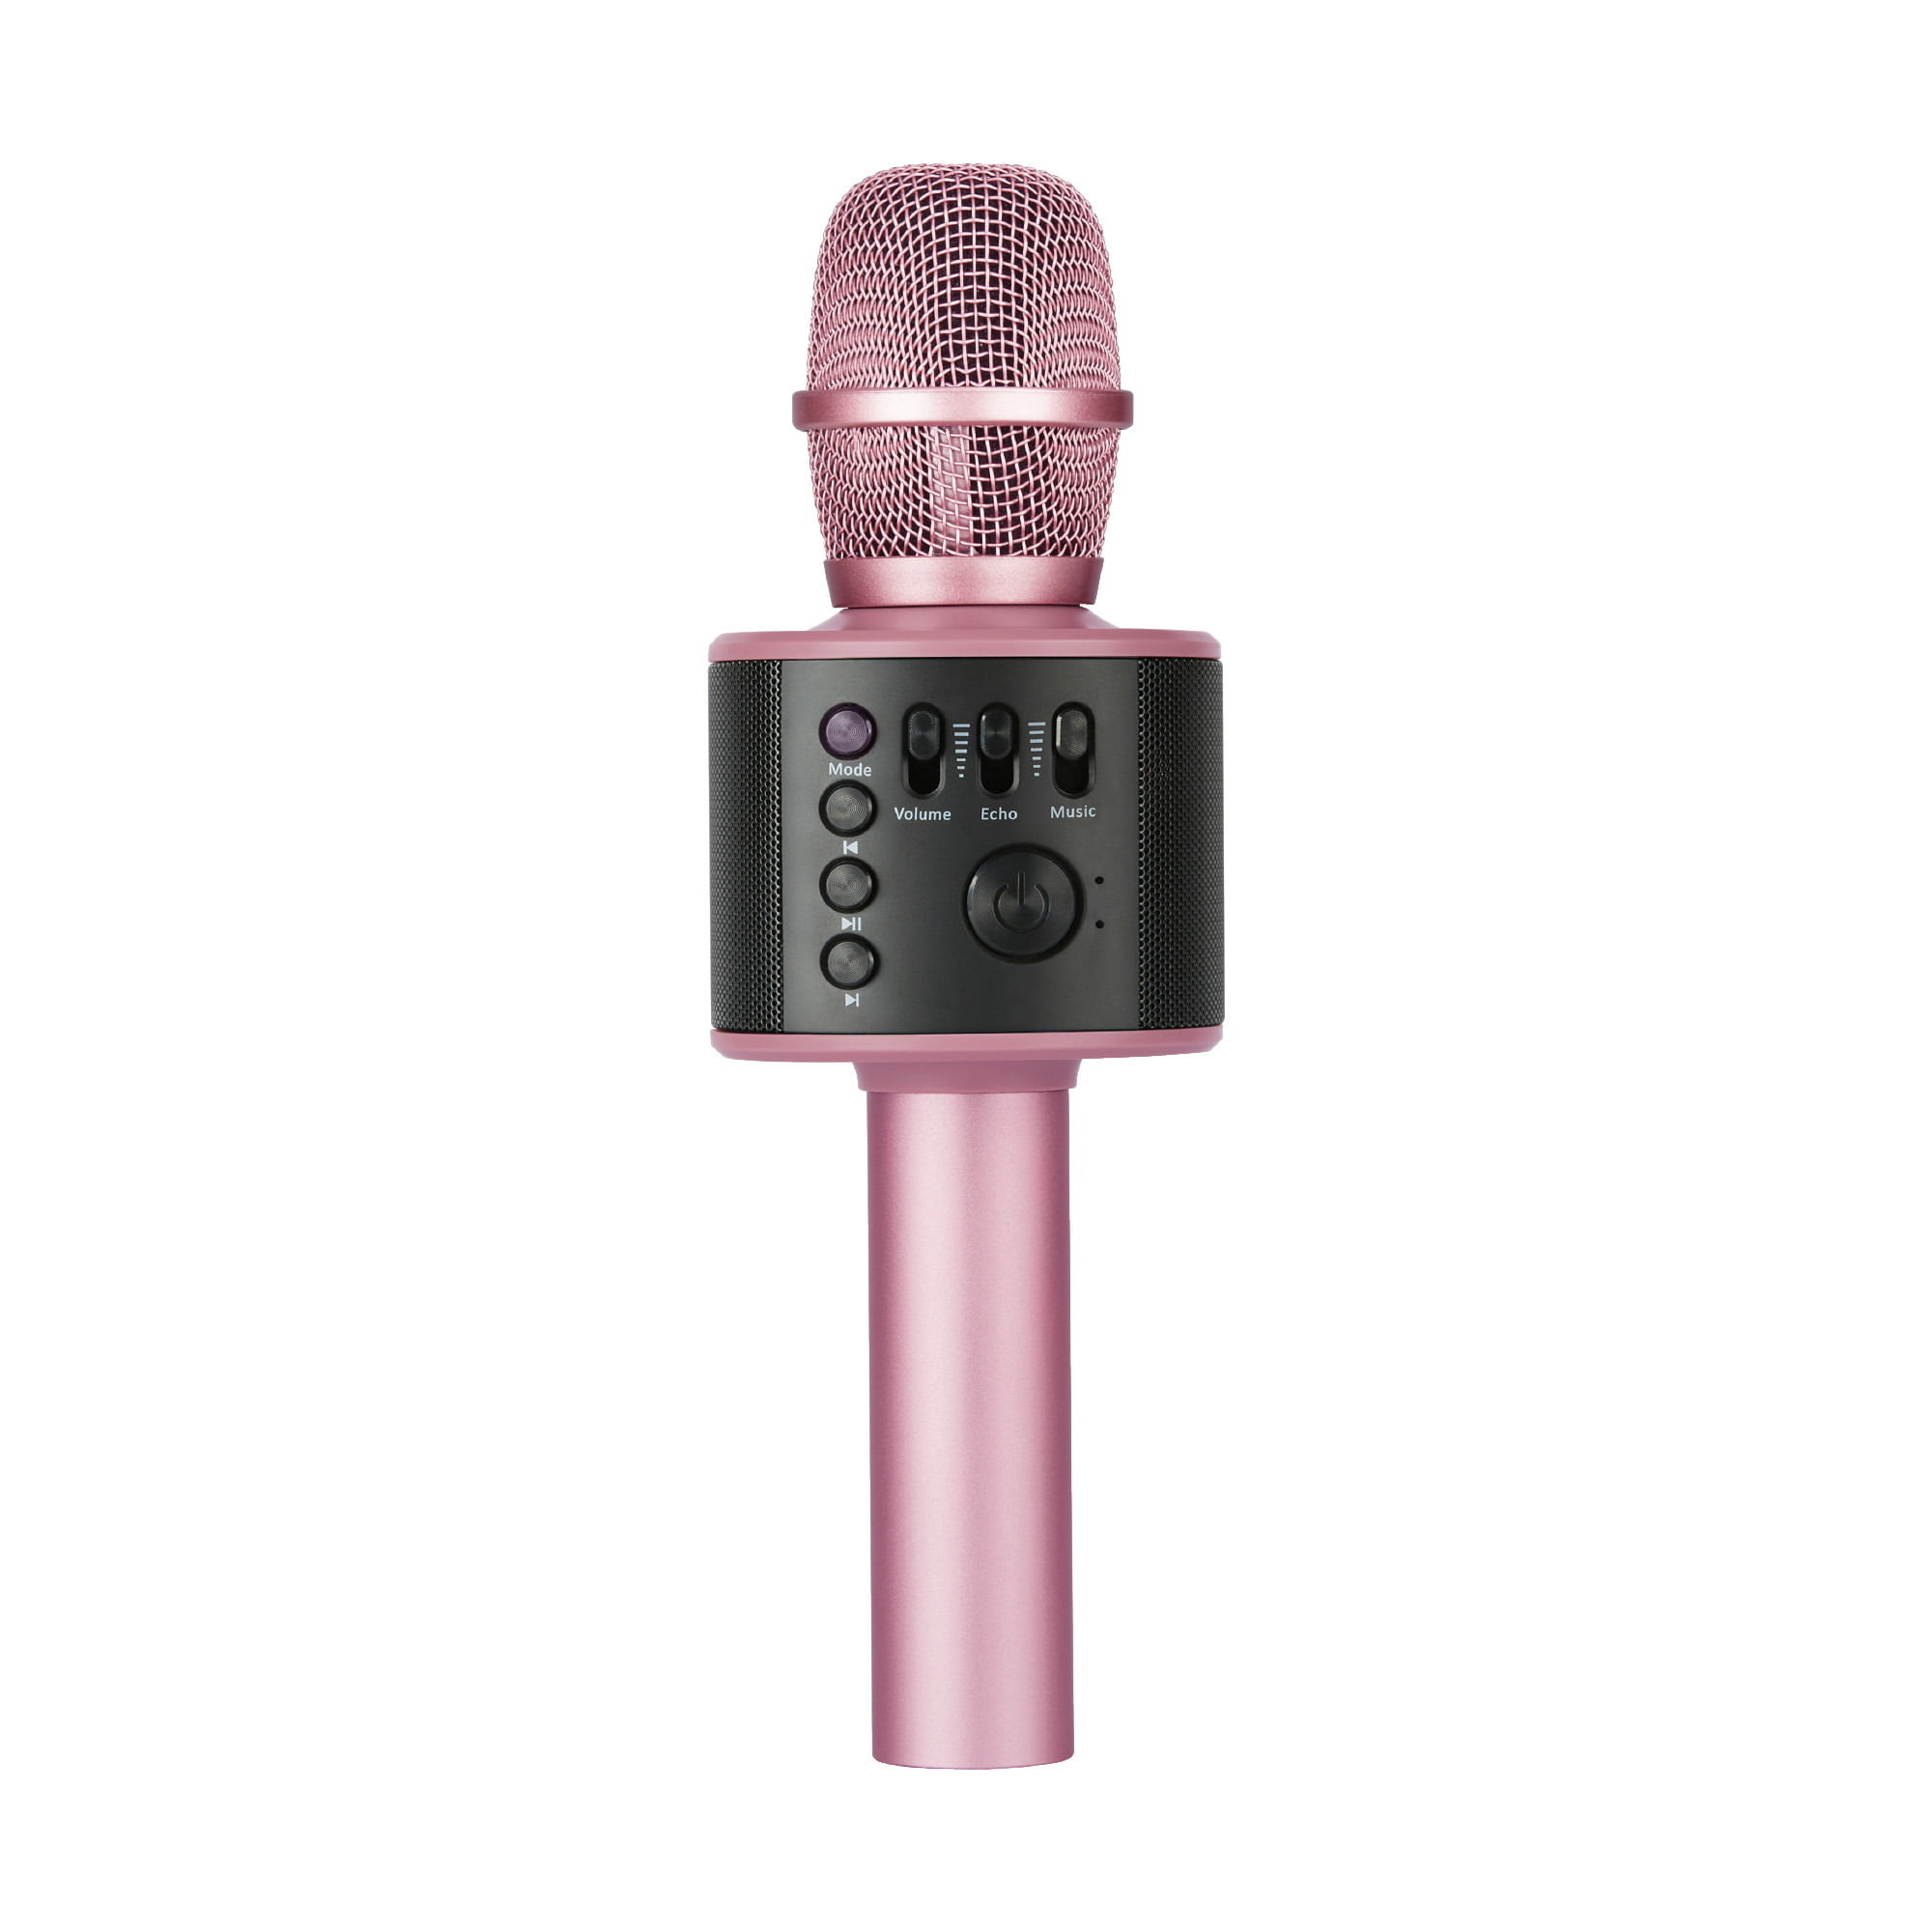 the karaoke mic in pink